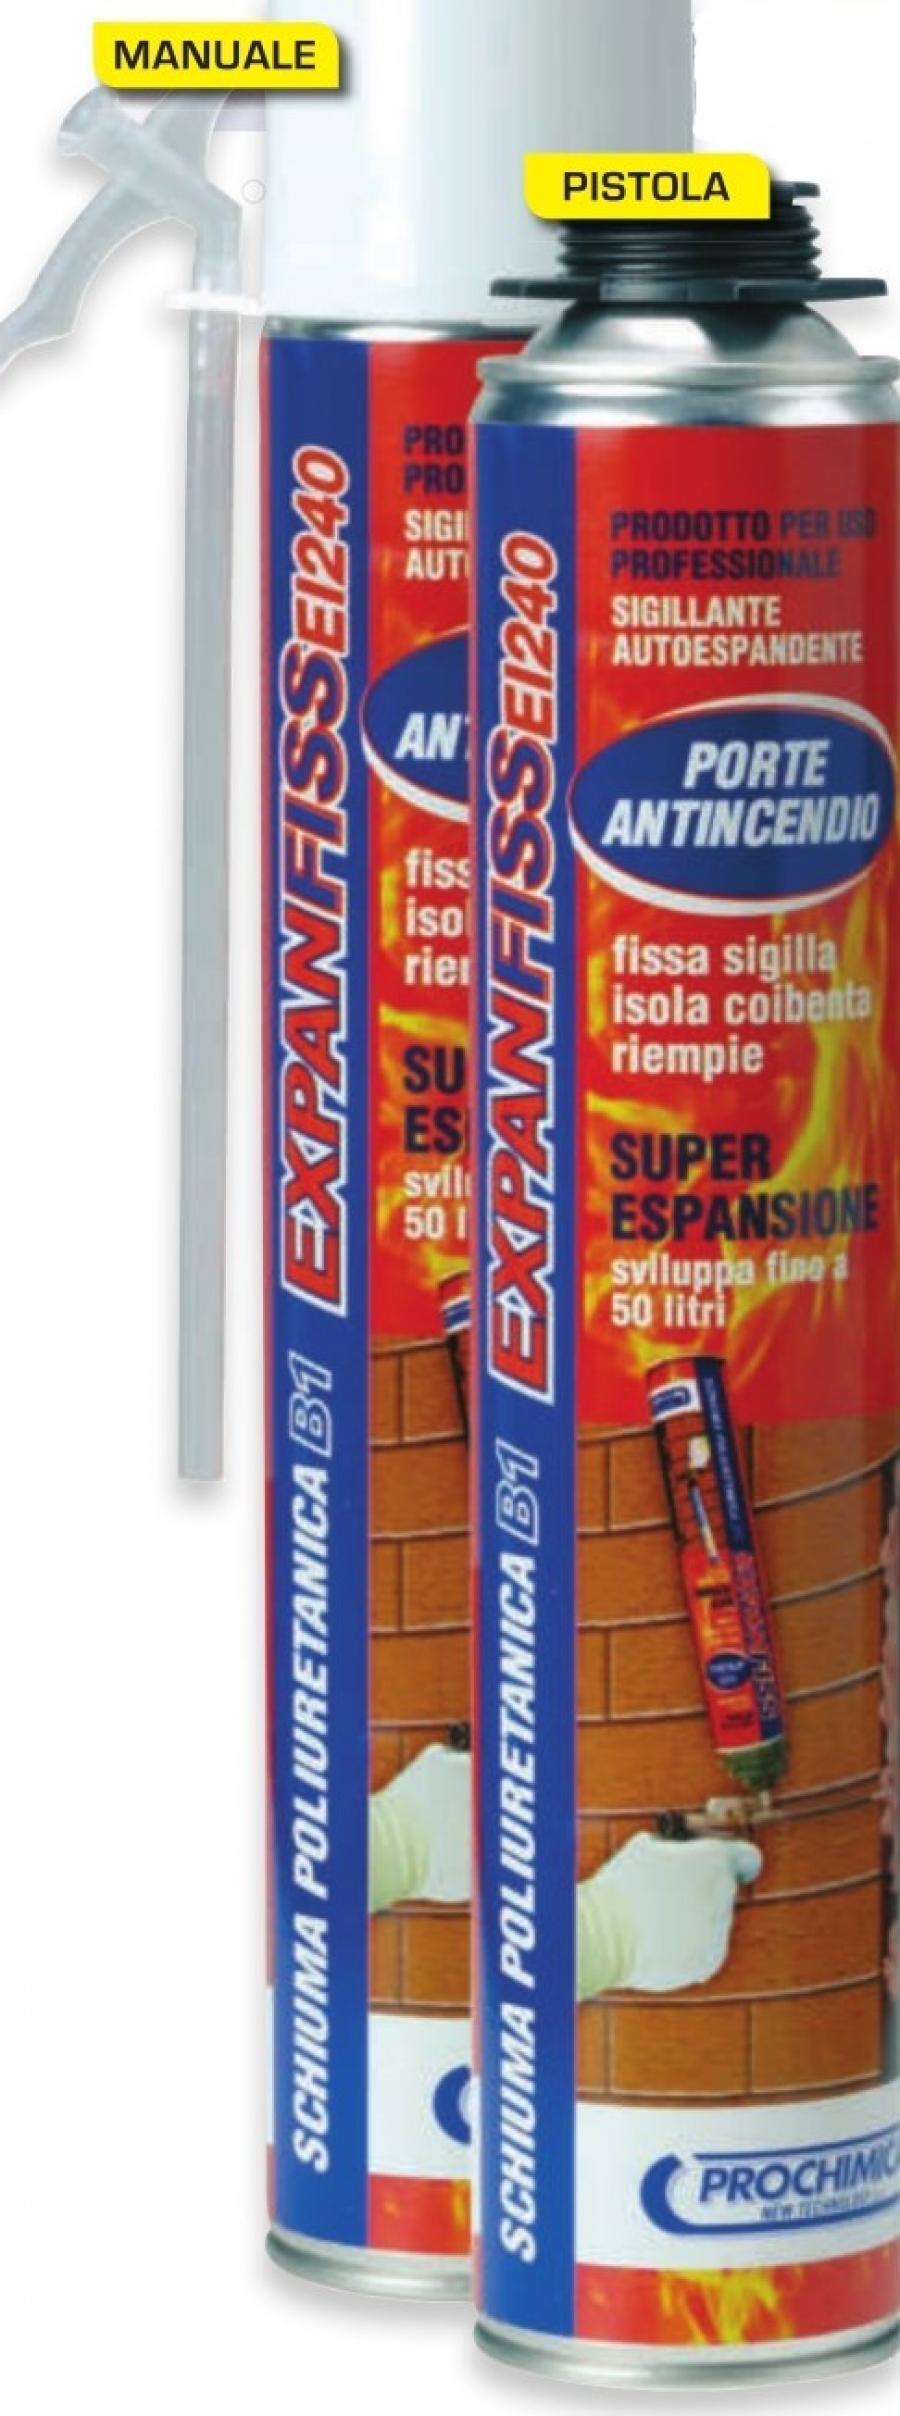 ESPANSFISS FUOCO ml. 750
manuale
(schiuma poliuretanica manuale EI 180 B1)